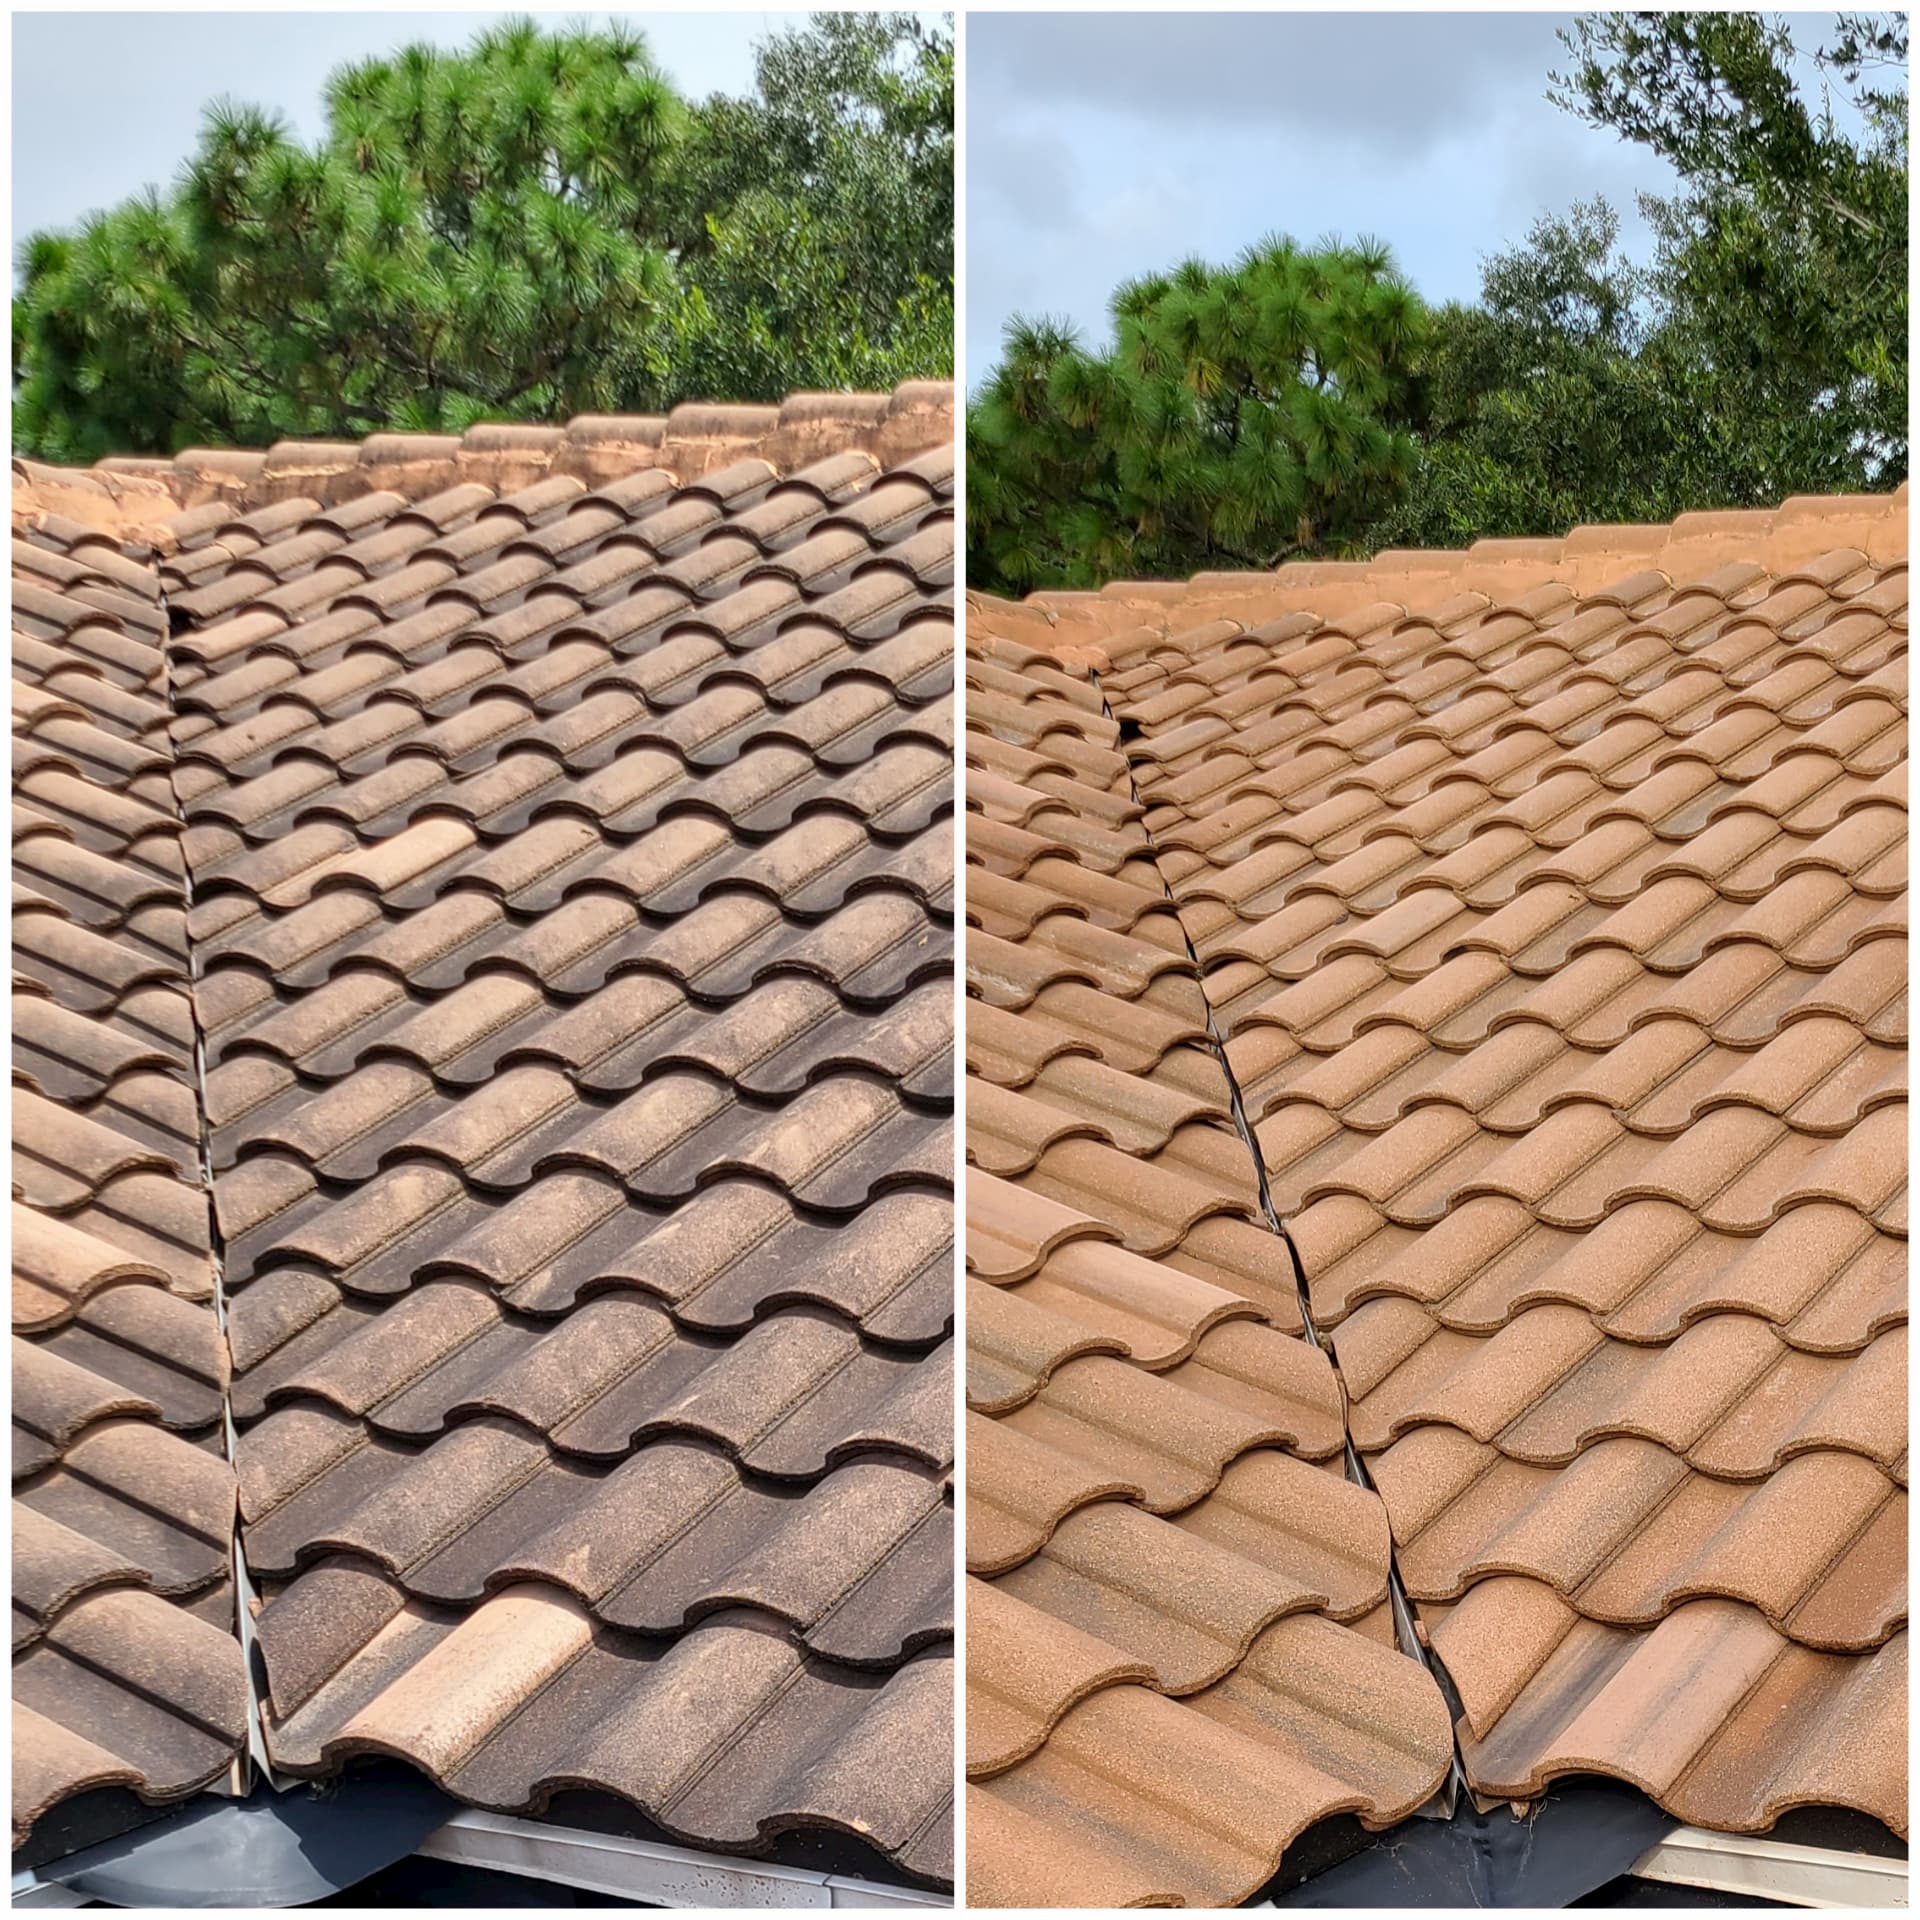 Tile roof washing sandestin fl